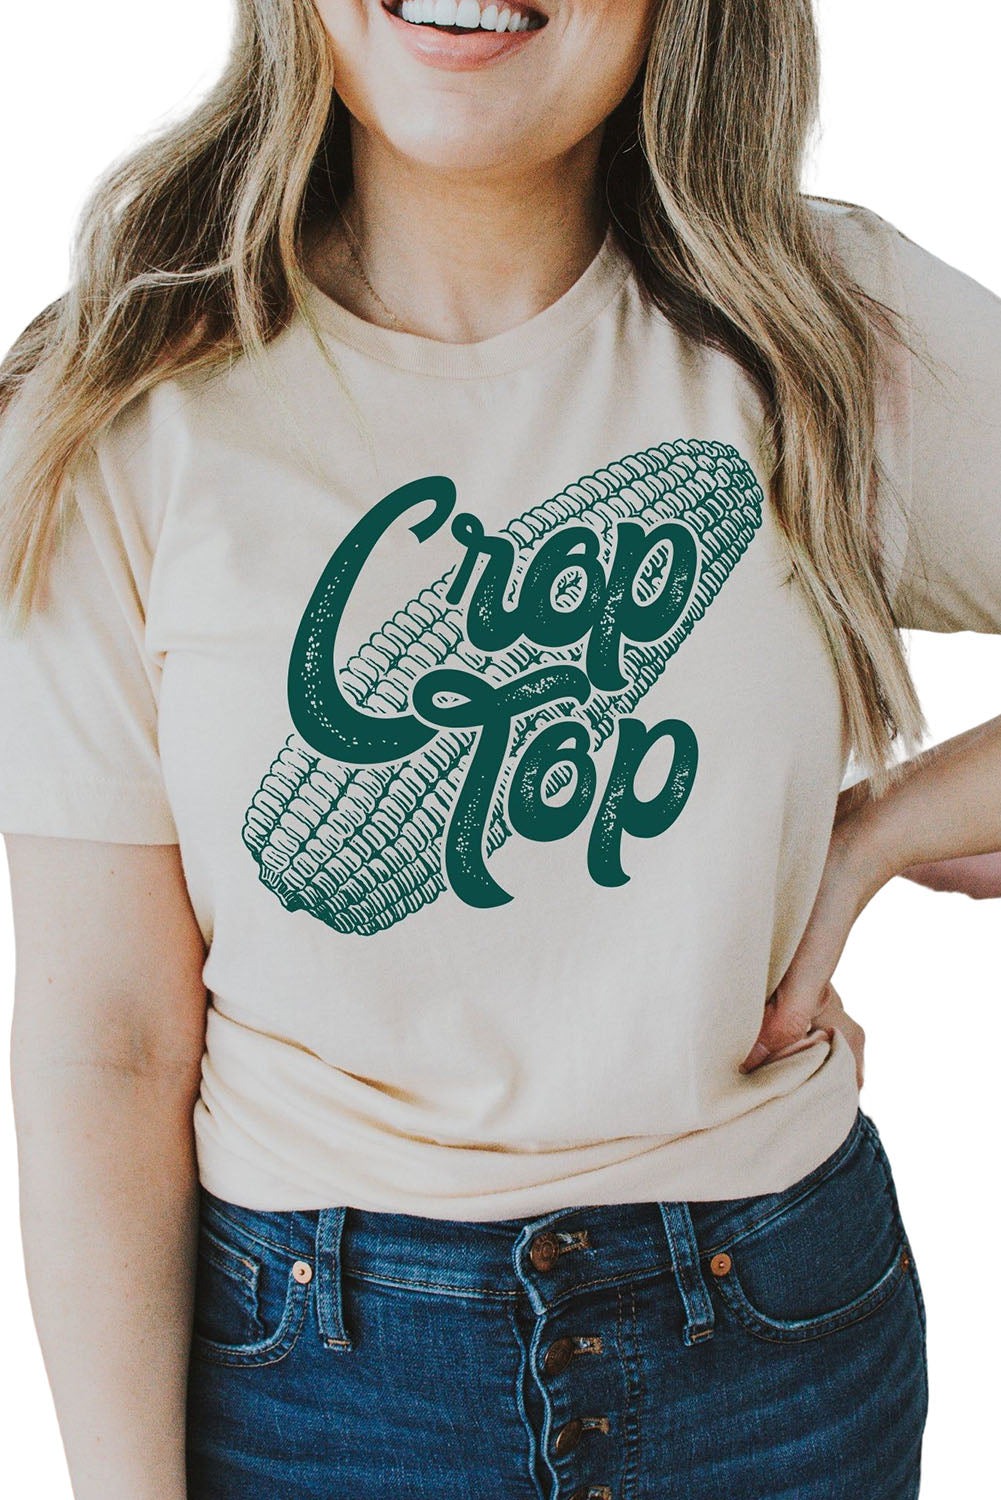 Khaki Corn Crop Top Graphic Tee